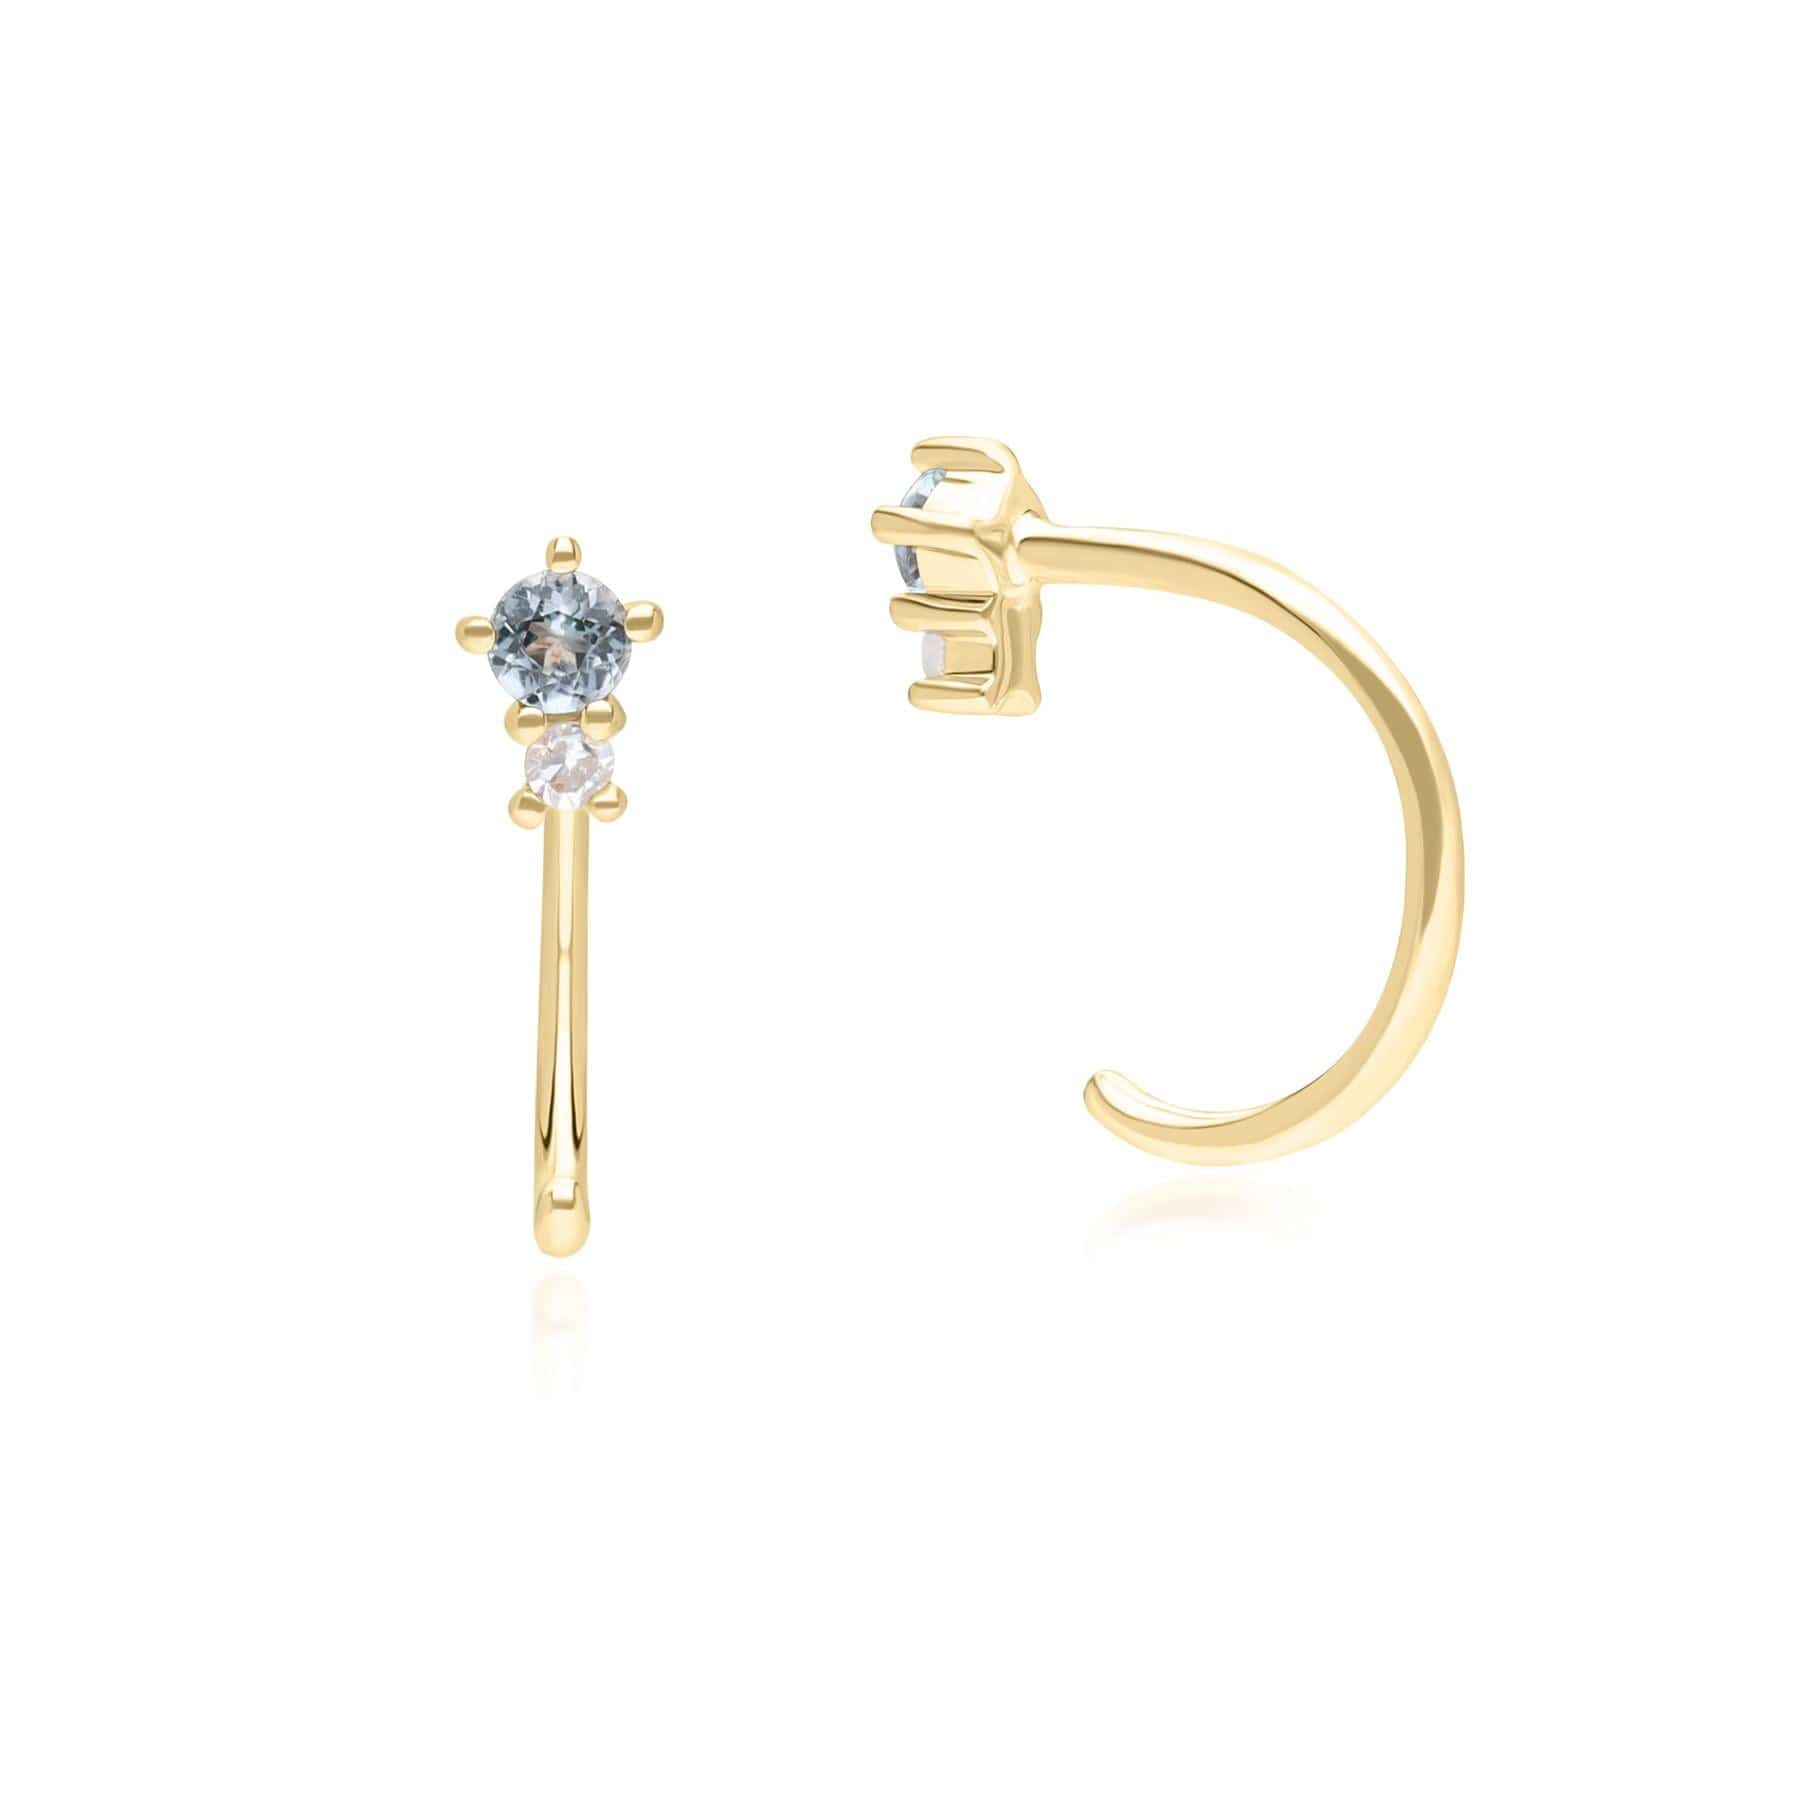 135E1823039 Modern Classic Sky Blue Topaz & Diamond Pull Through Hoop Earrings in 9ct Yellow Gold On Model